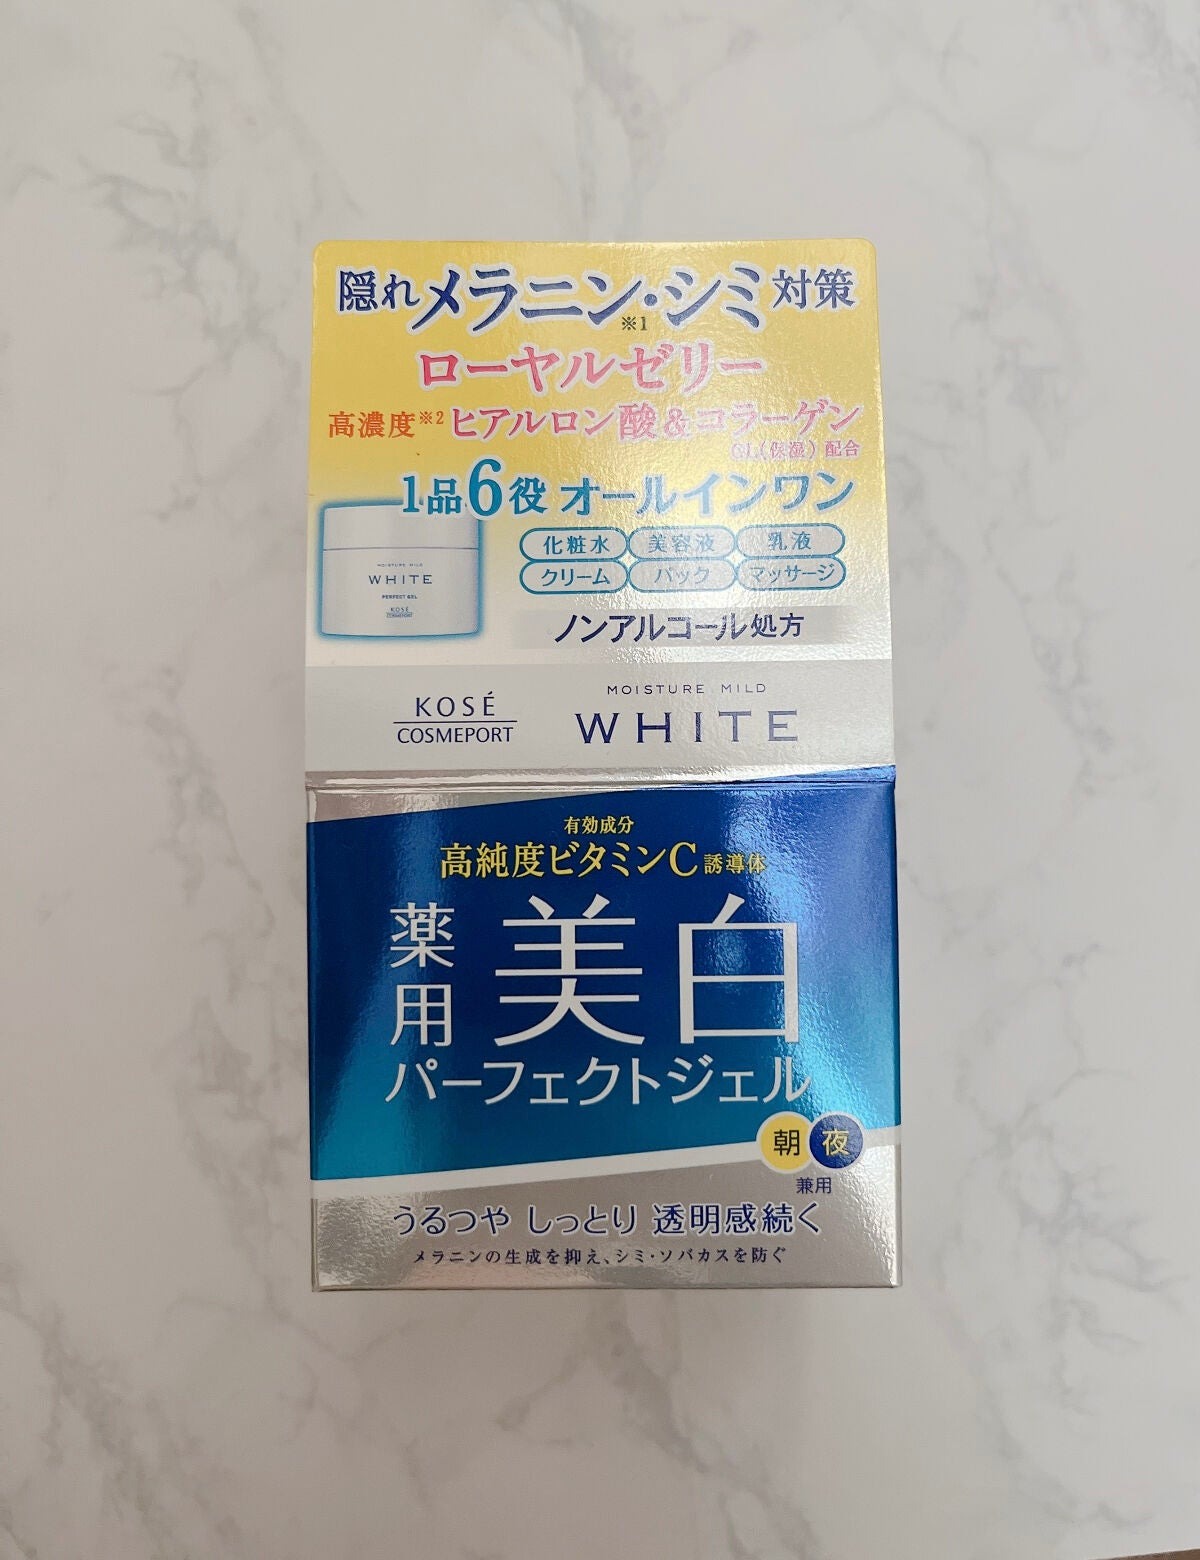 kose white moisture mild perfect gel 6 in 1